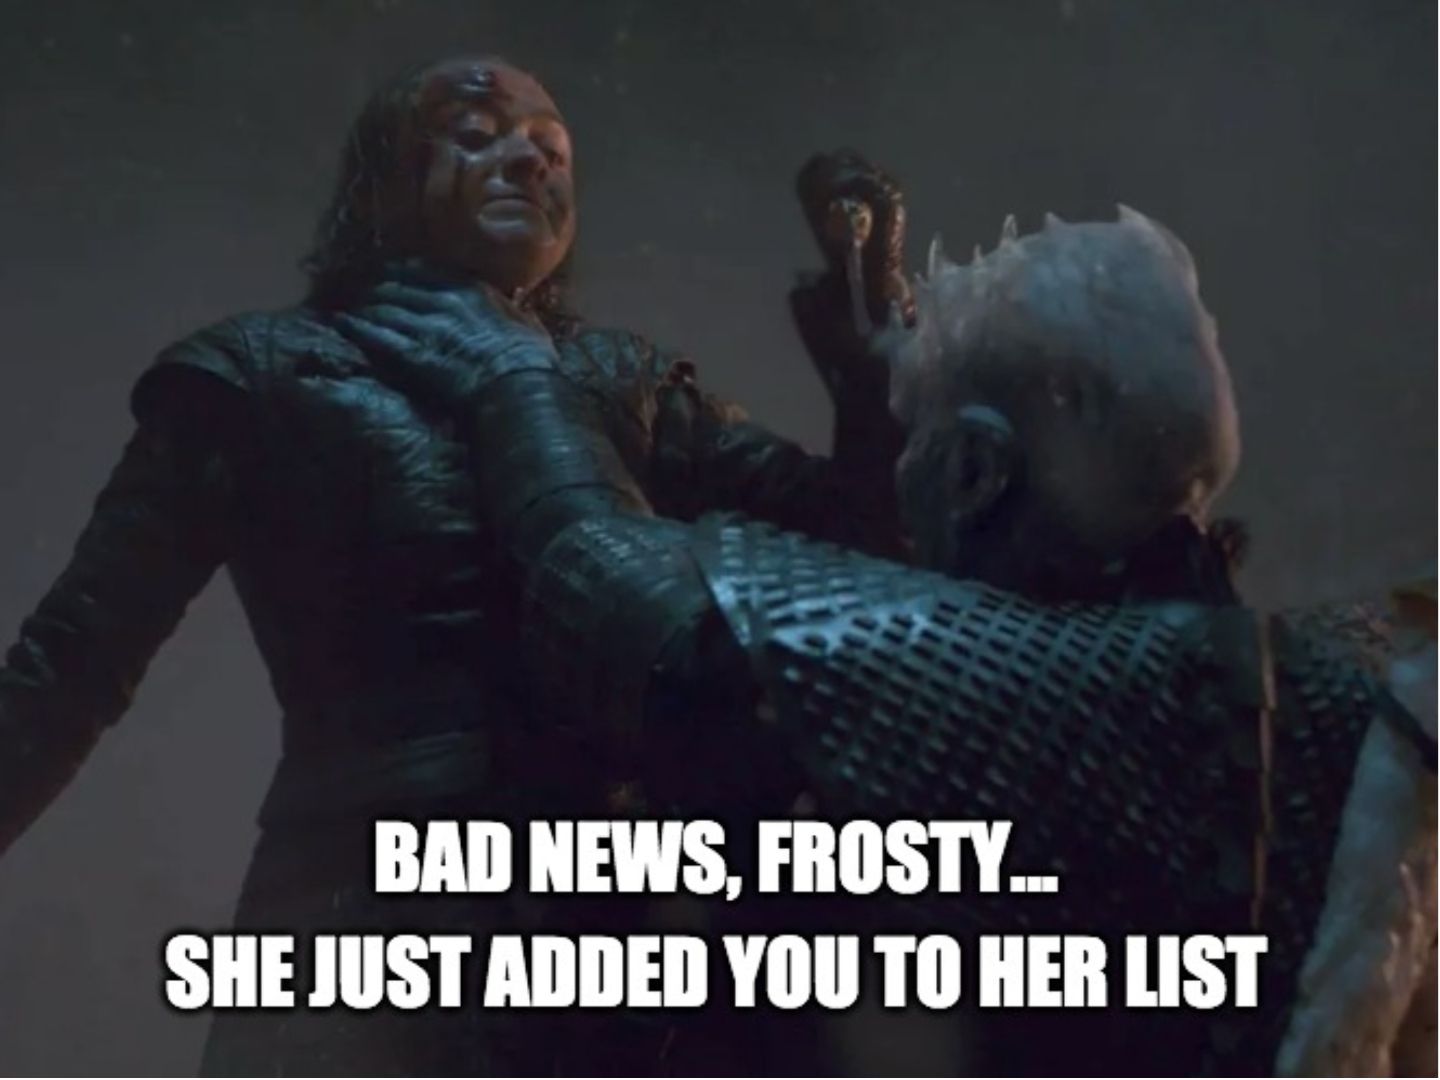 Meme about Arya fighting the Night King. 